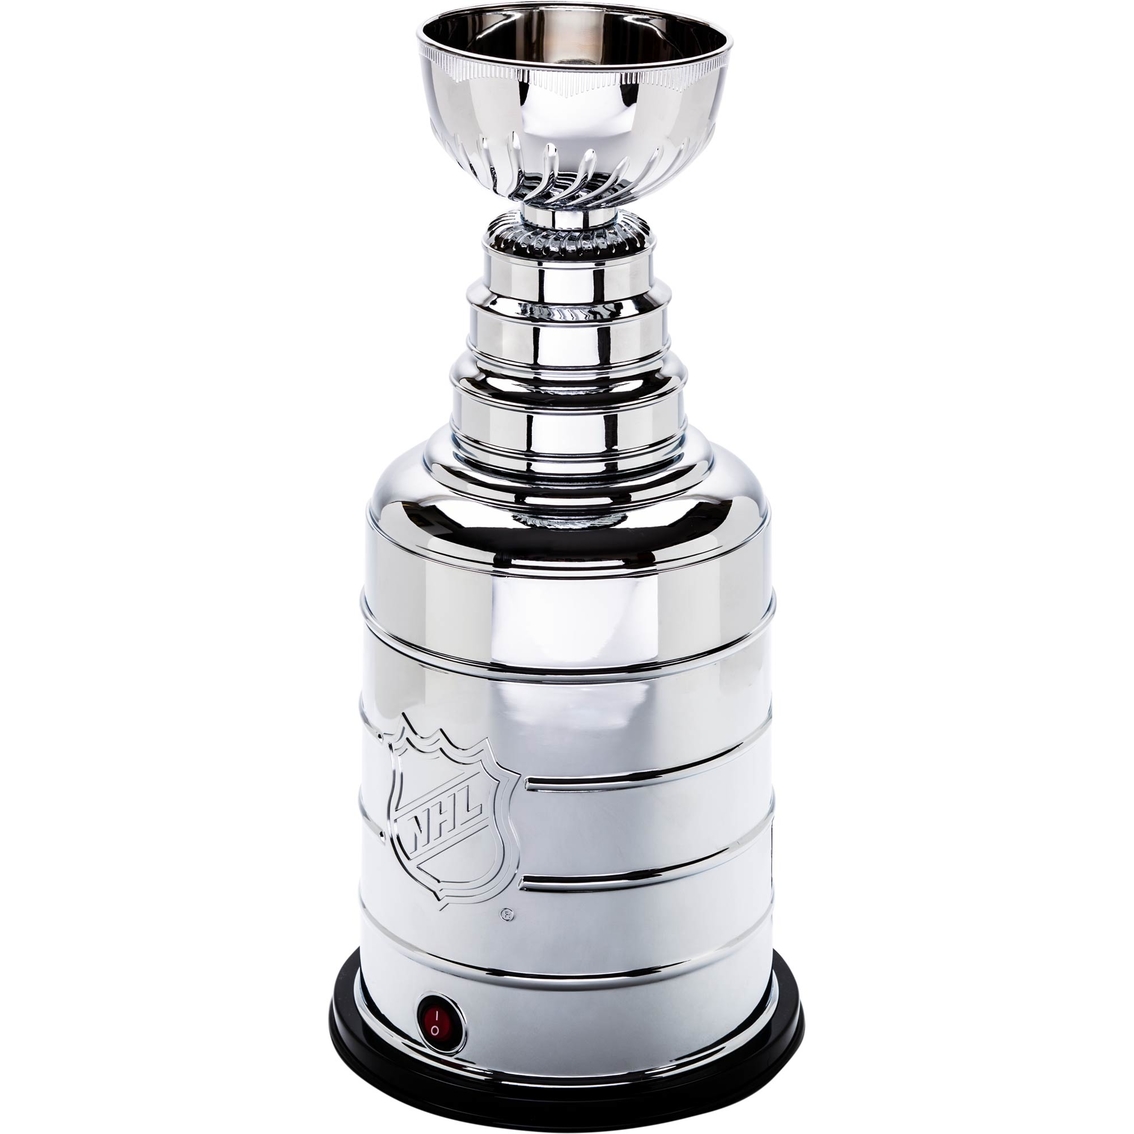 Stanley Cup Popcorn Maker - Image 1 of 4